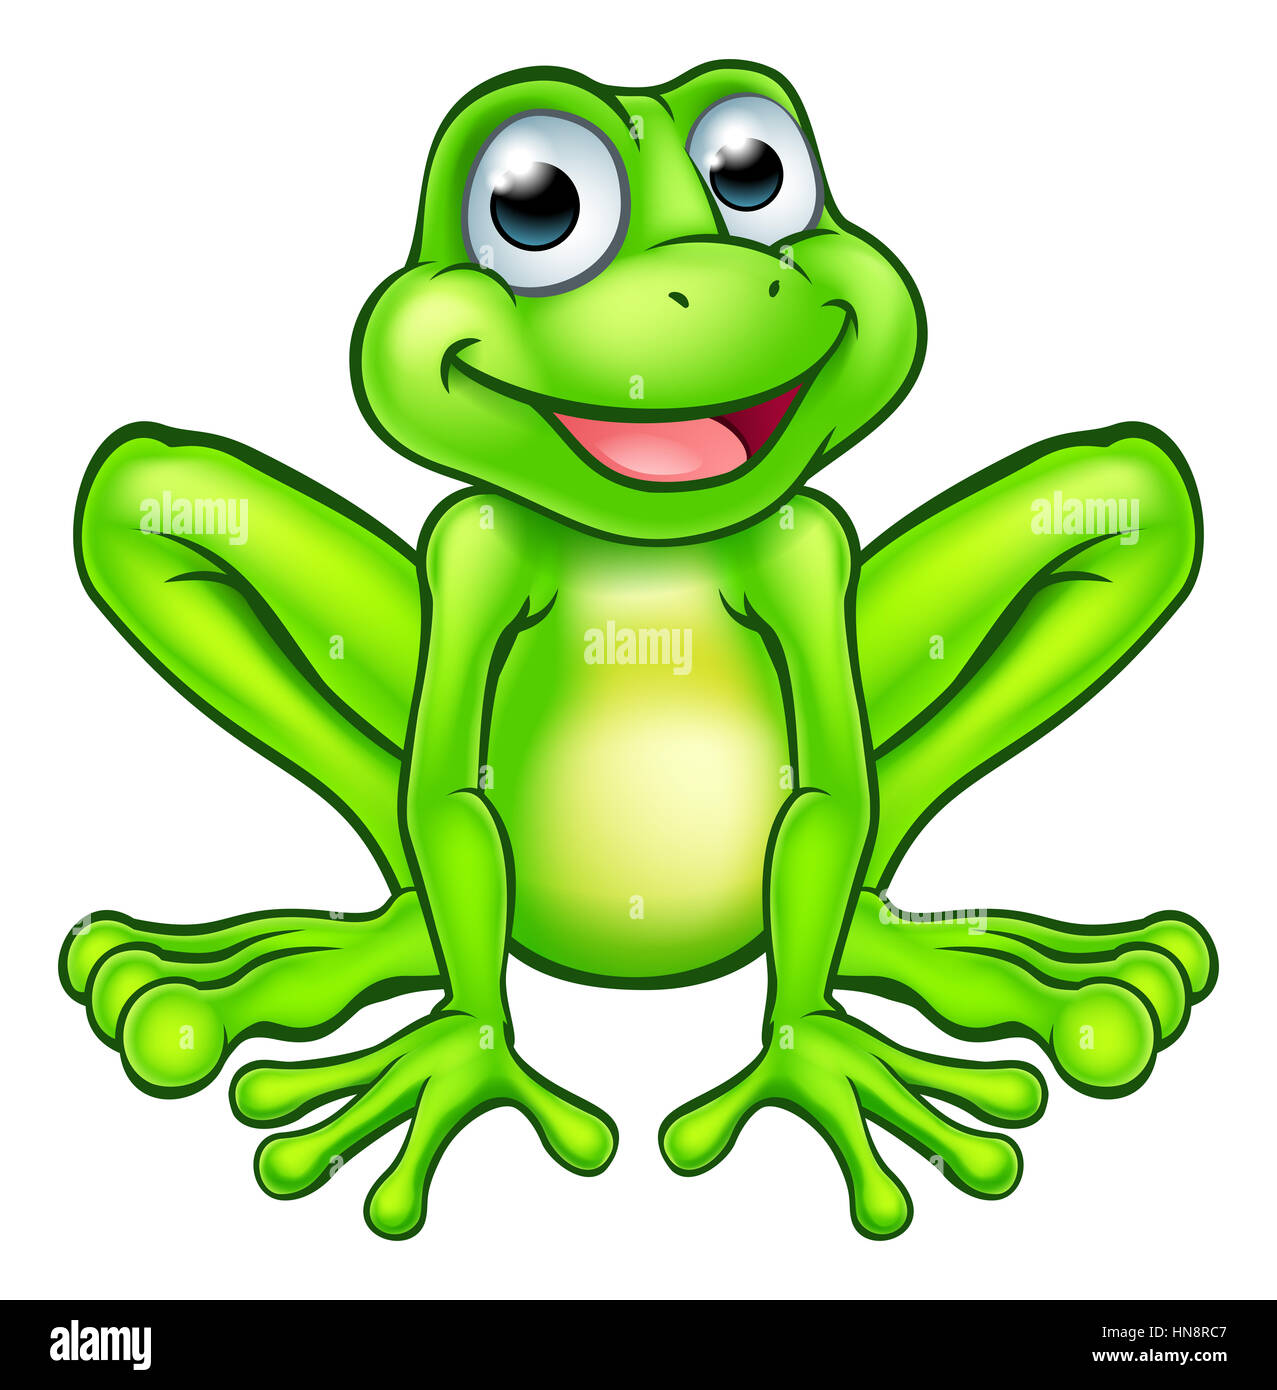 An illustration of a cute cartoon frog mascot character ...